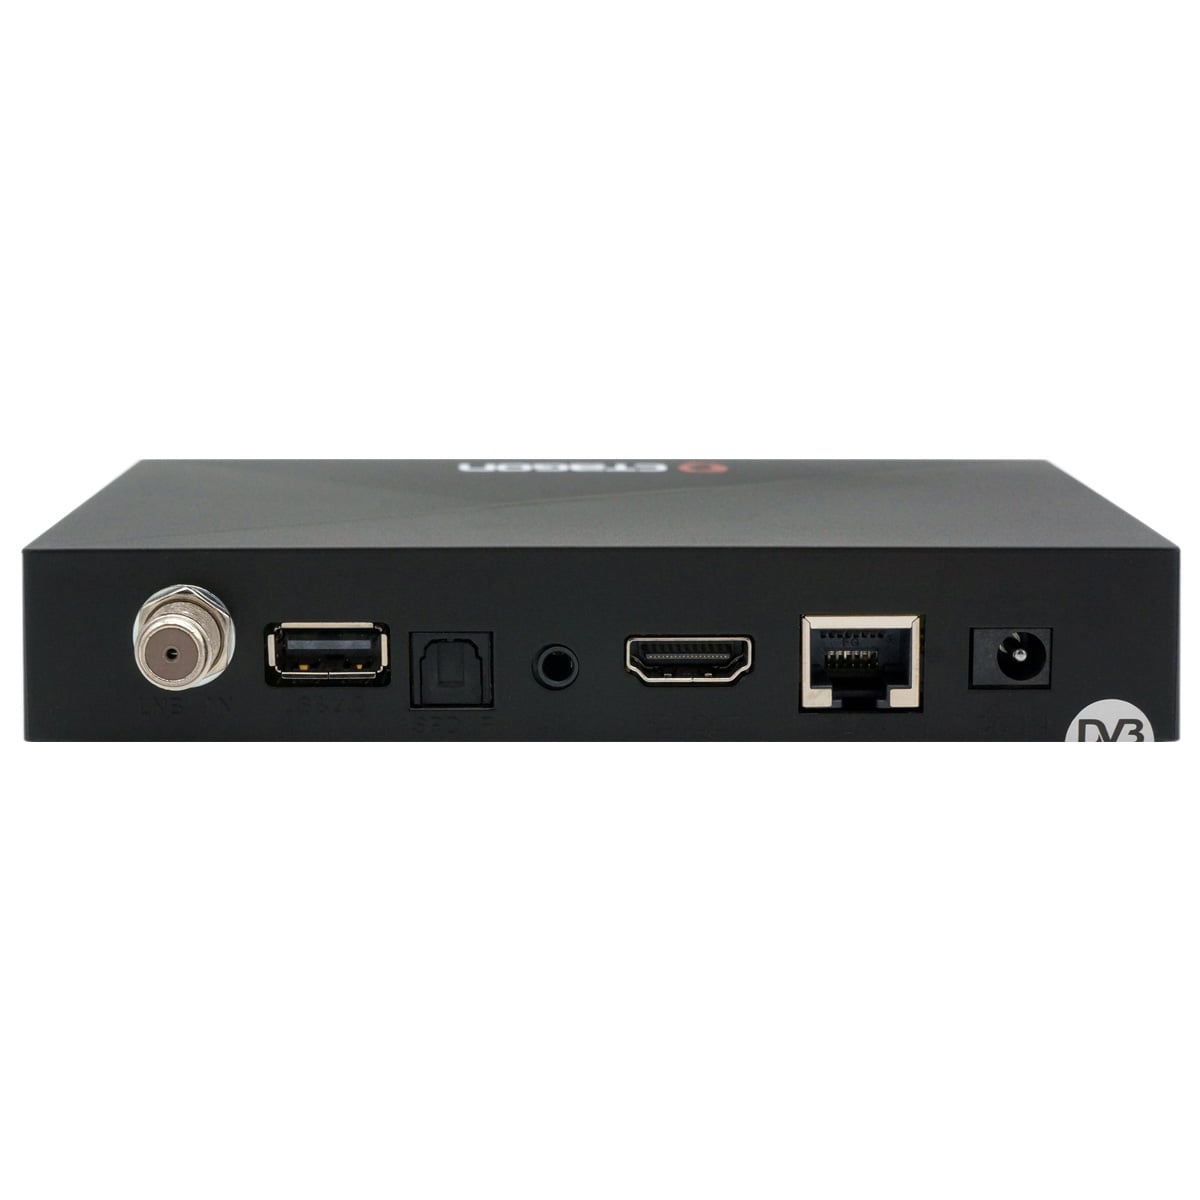 Octagon SFX6018 WL S2+IP Full HD Sat IP-Receiver (Linux E2 & Define OS, DVB-S2, 1080p, HDMI, WiFi)